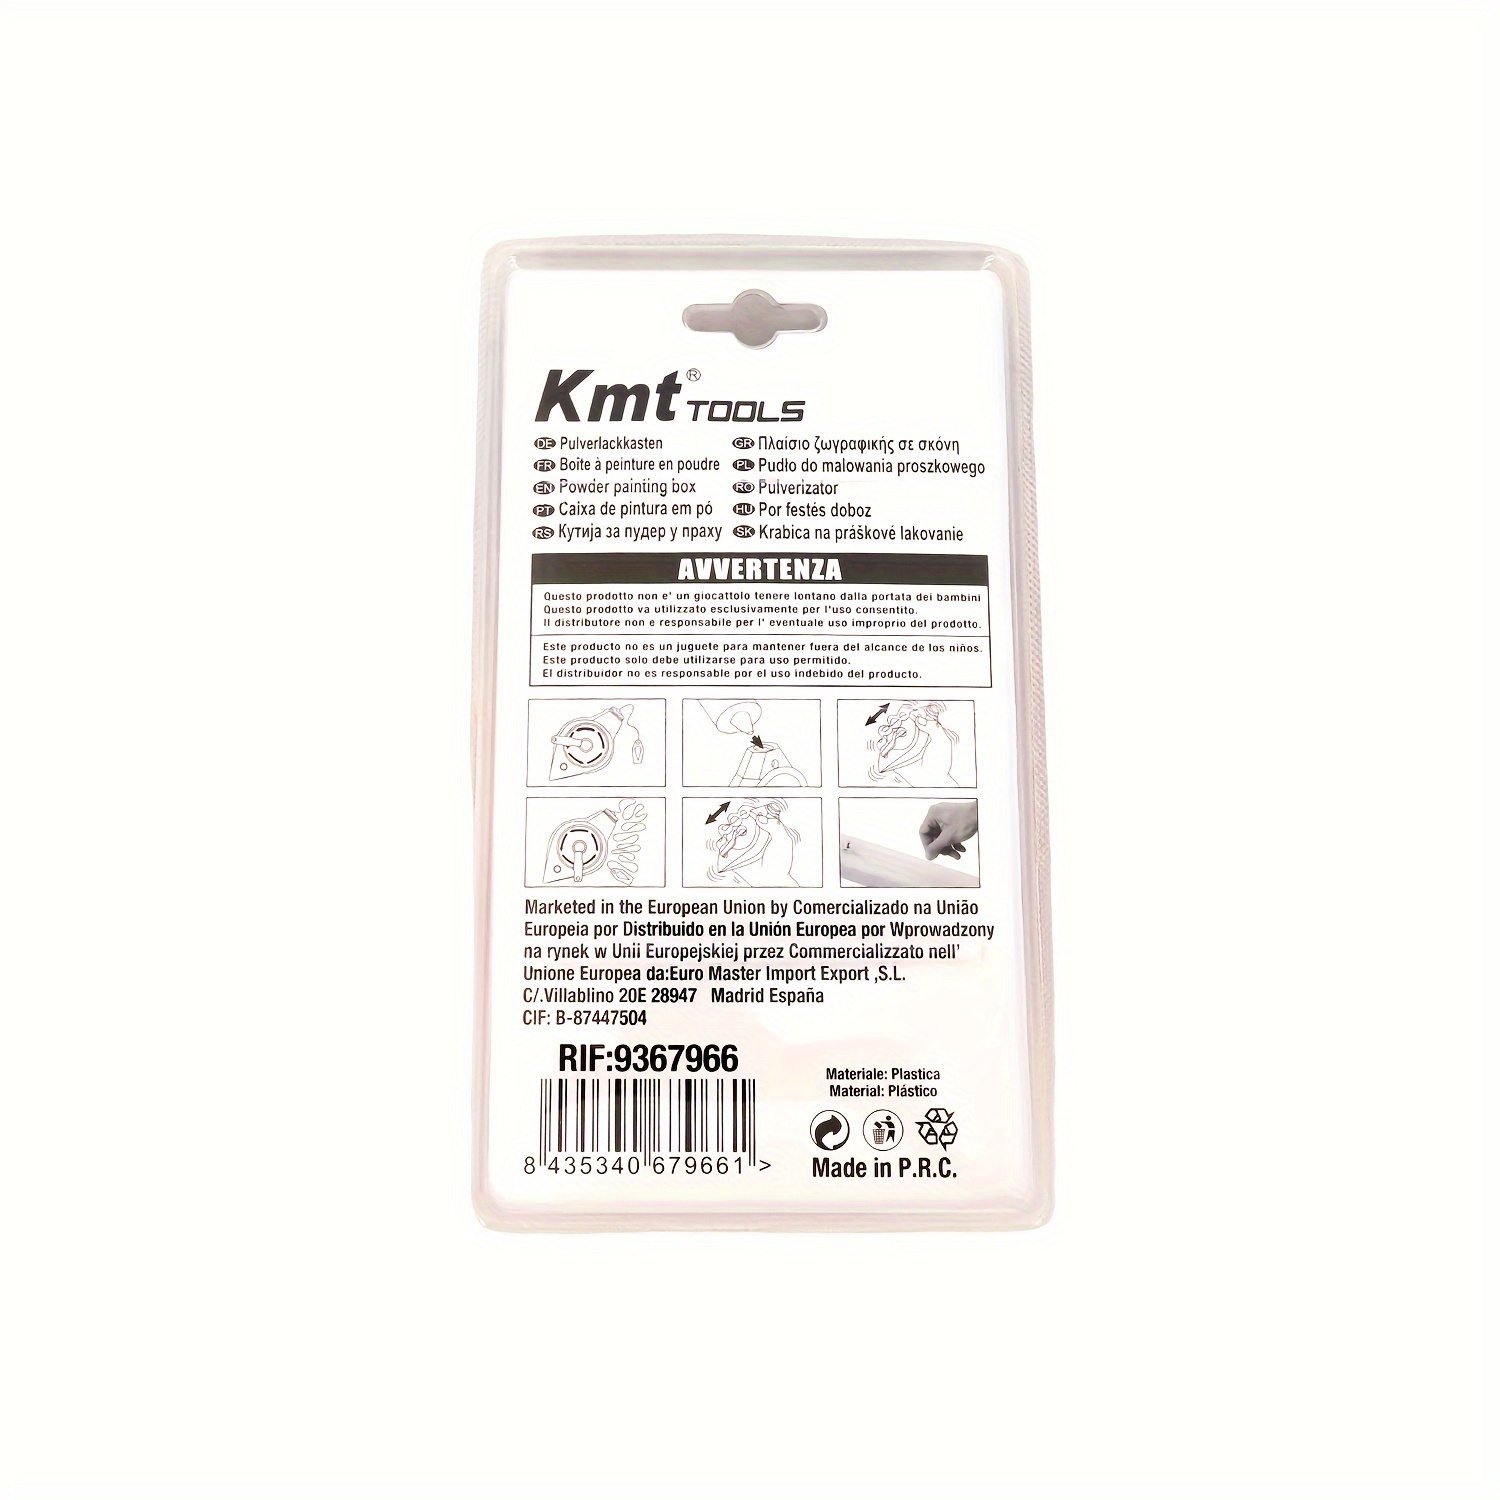 KMT 98FT Professional Chalk Line Reel & Chalk Powder Combo Pack